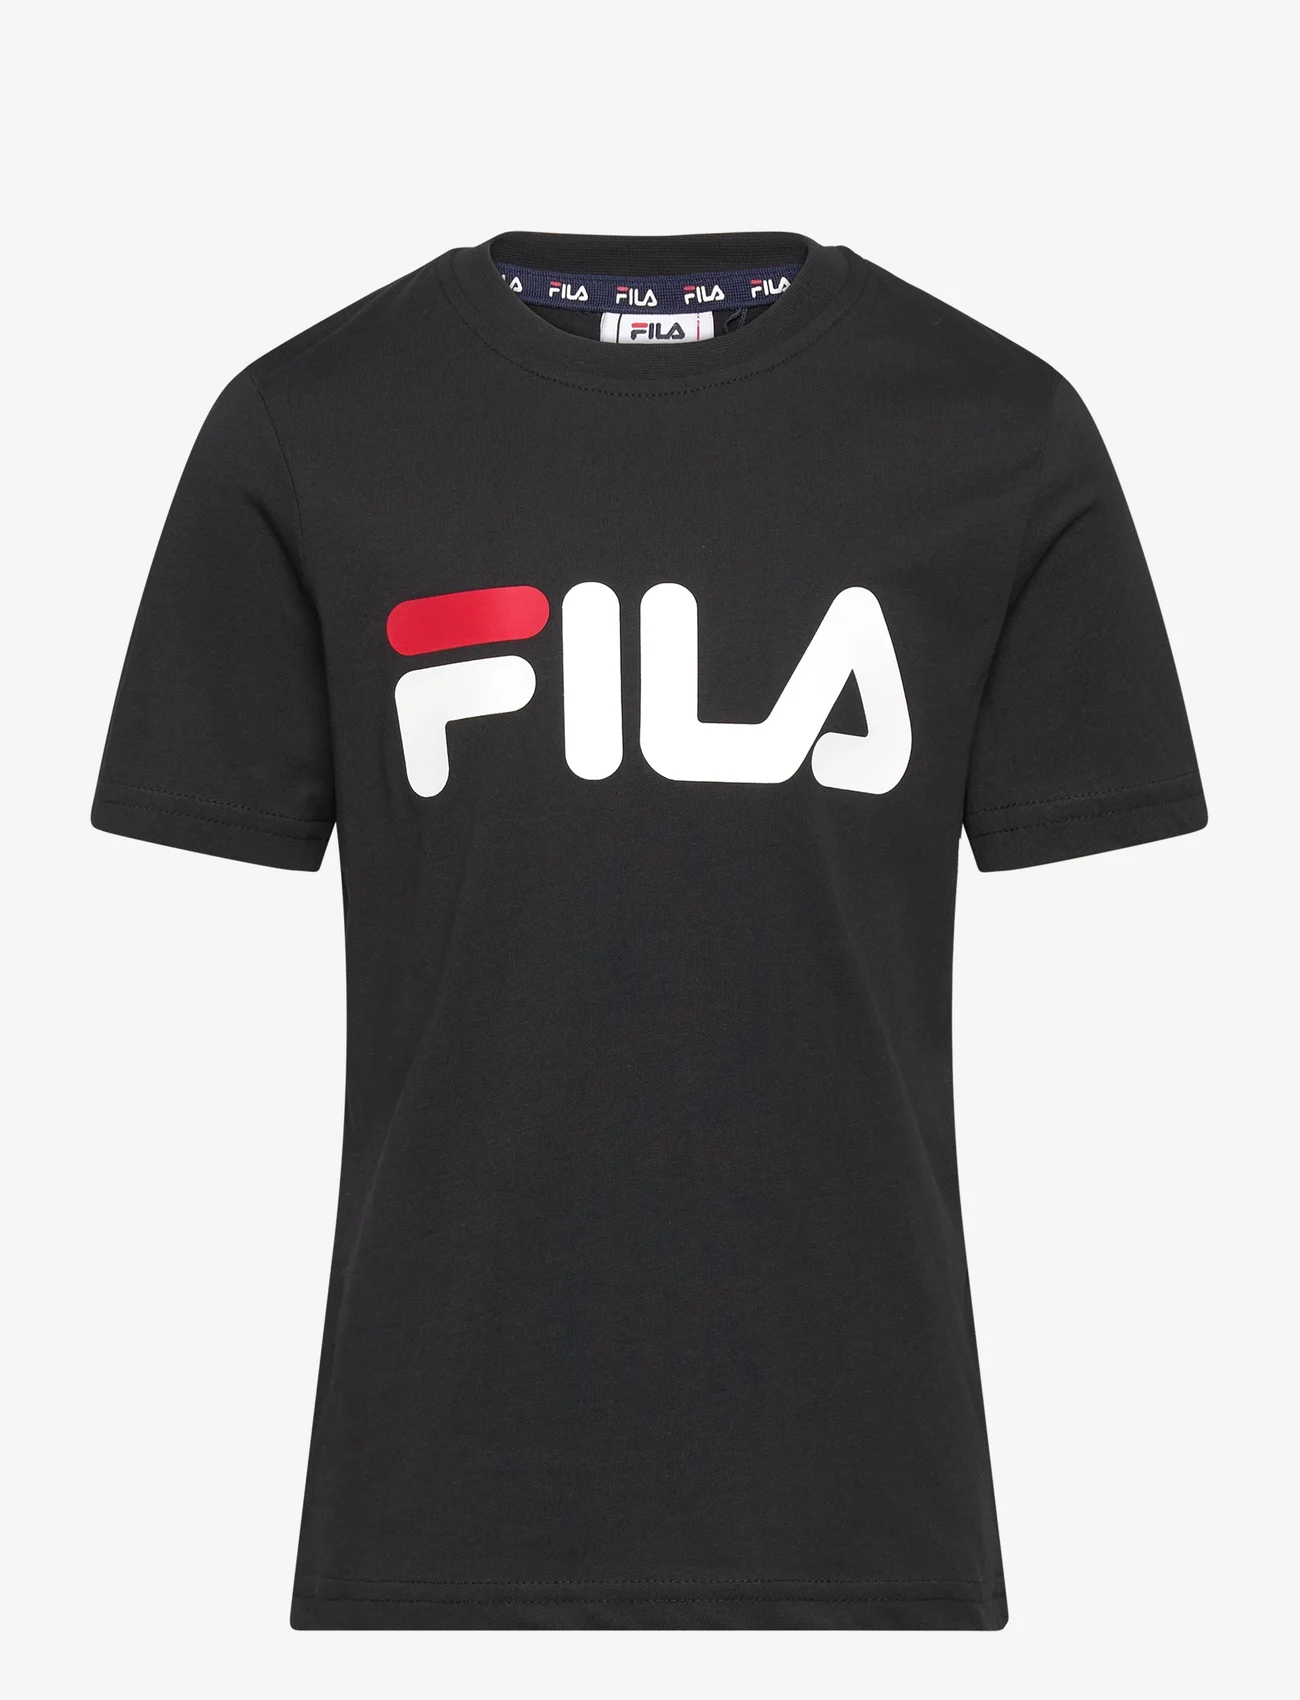 FILA - BAIA MARE classic logo tee - kurzärmelig - black - 0